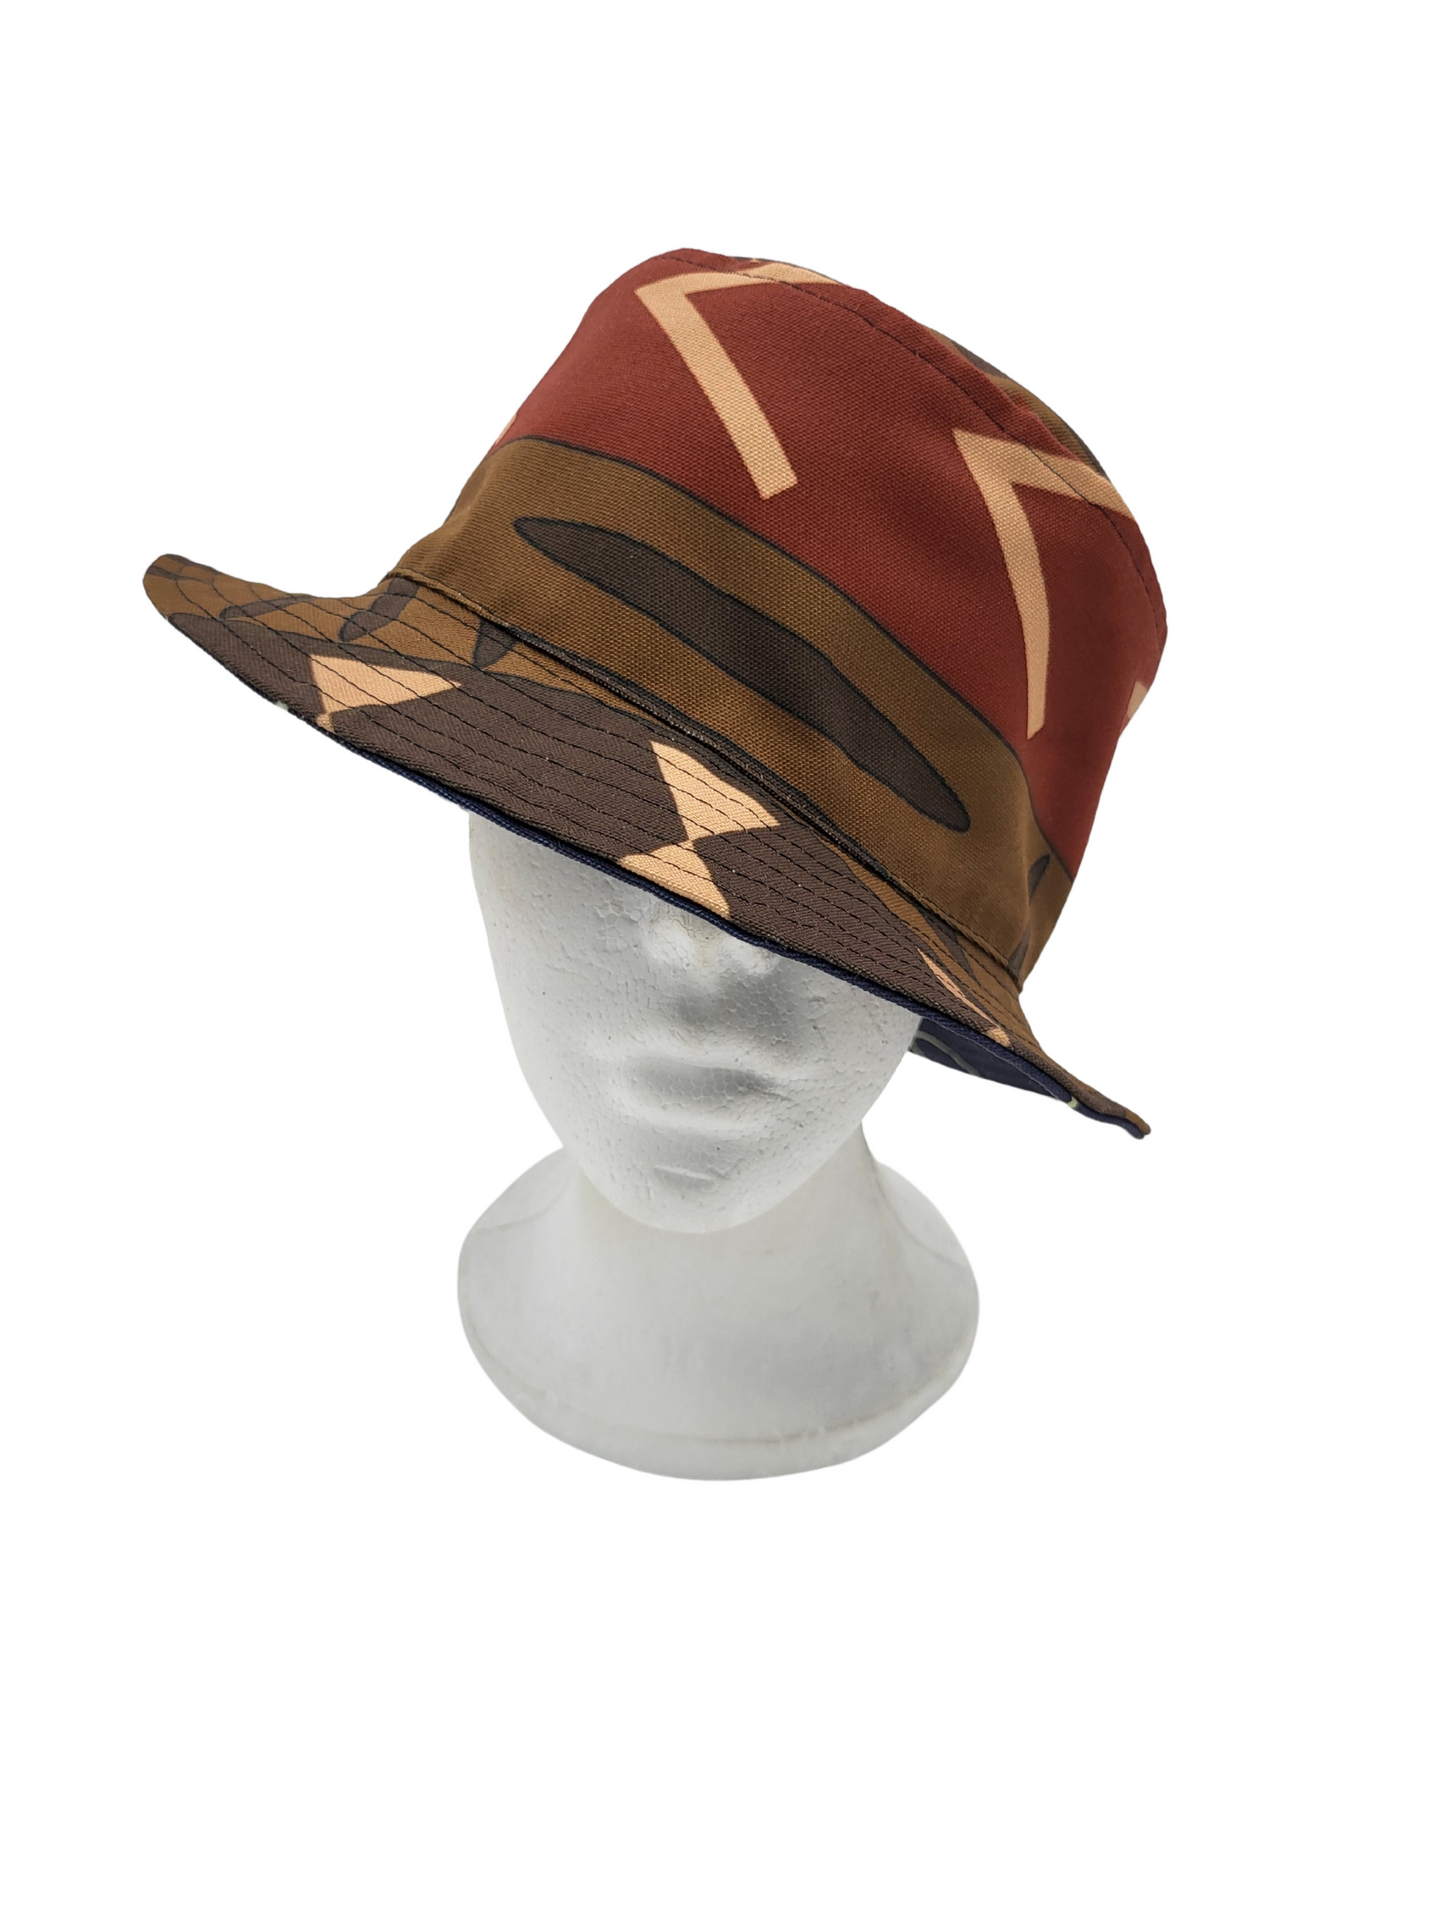 Indigo Pattern 1/Mud Cloth Pattern 1 Unisex Reversible Bucket Hat